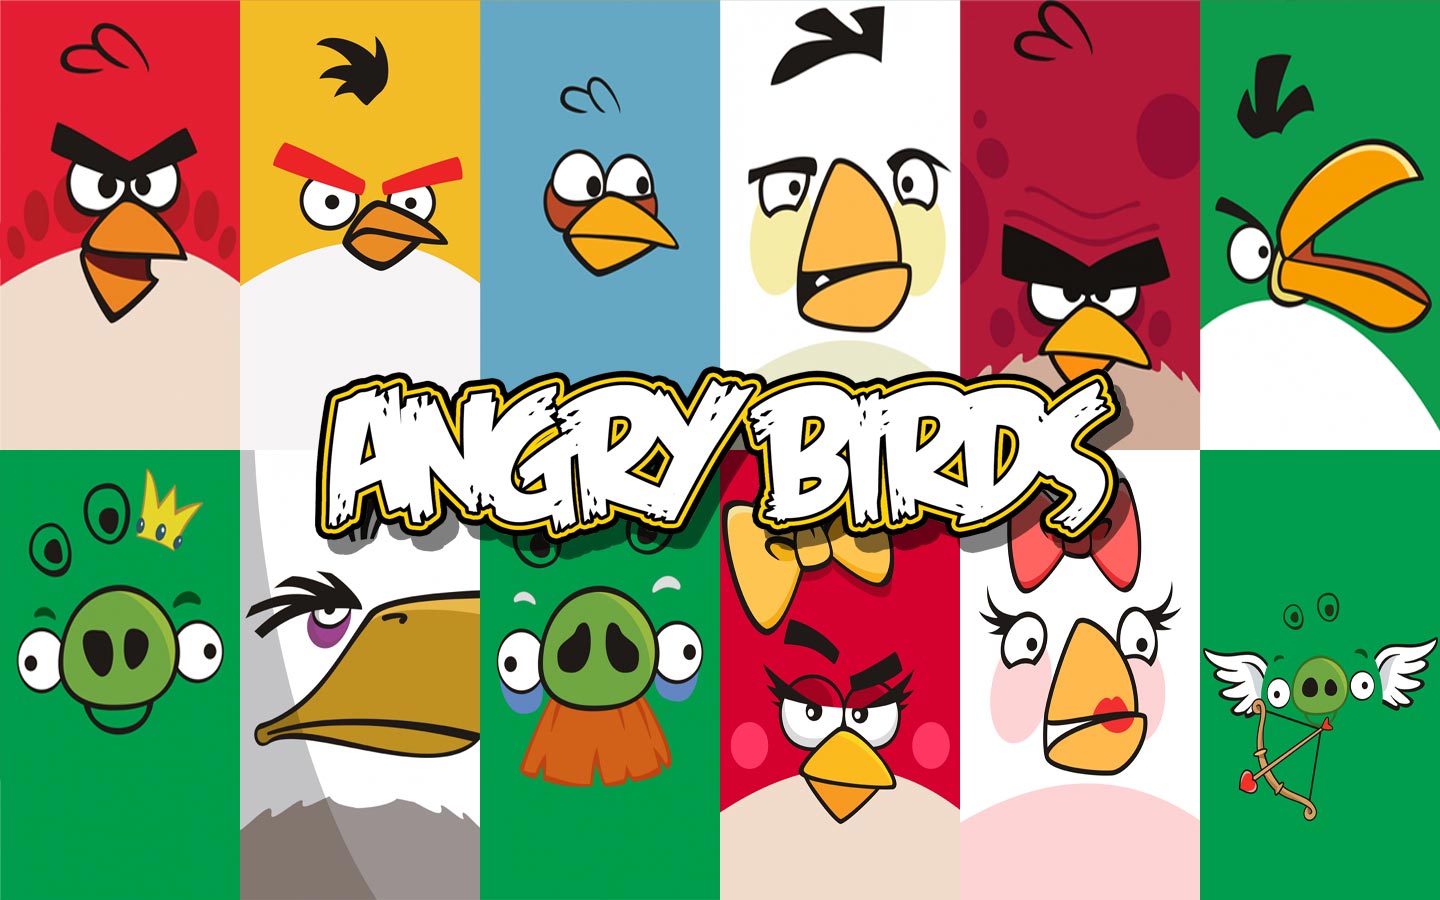 Angry Birds на компьютер